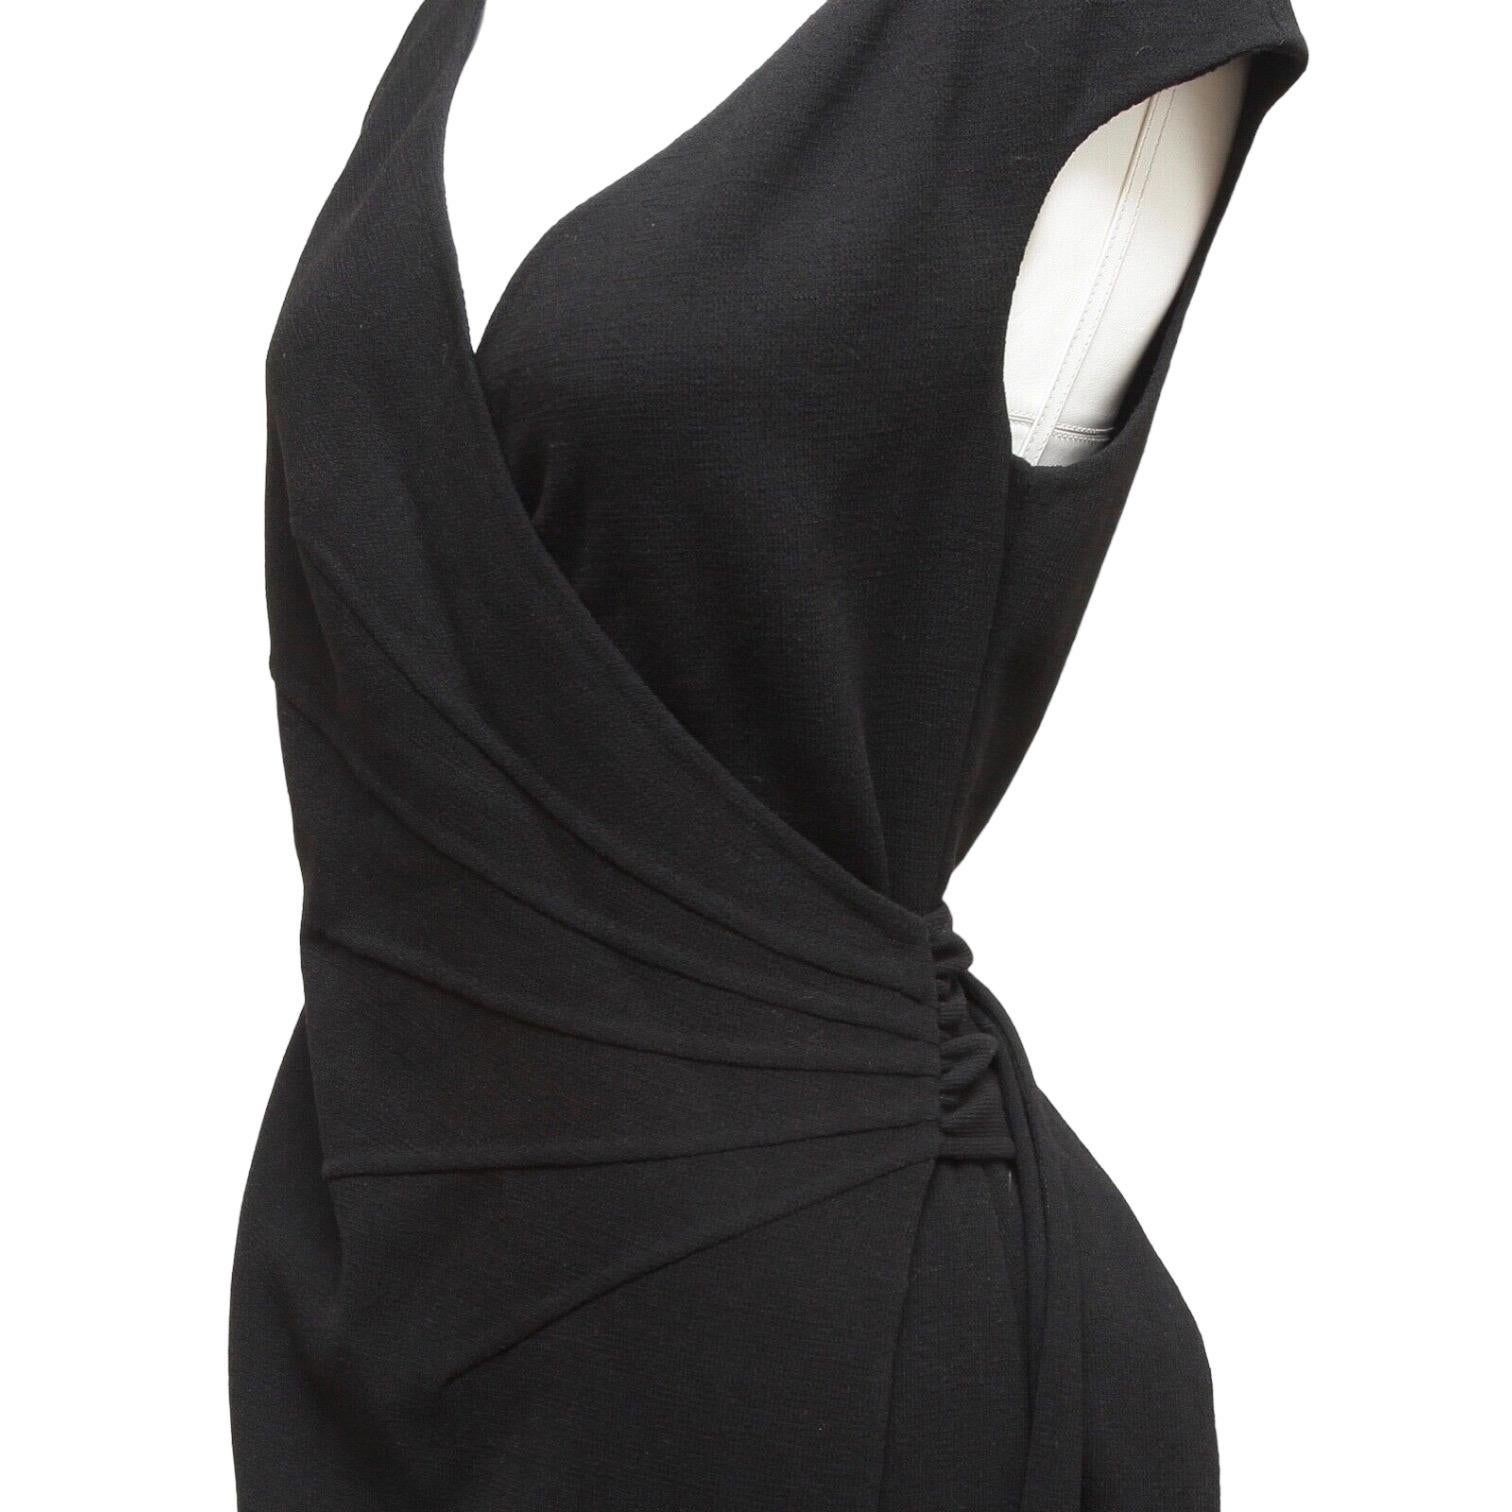 Women's OSCAR DE LA RENTA Dress Black Sleeveless Wrap Knit Sz 8 NWT $2190 For Sale